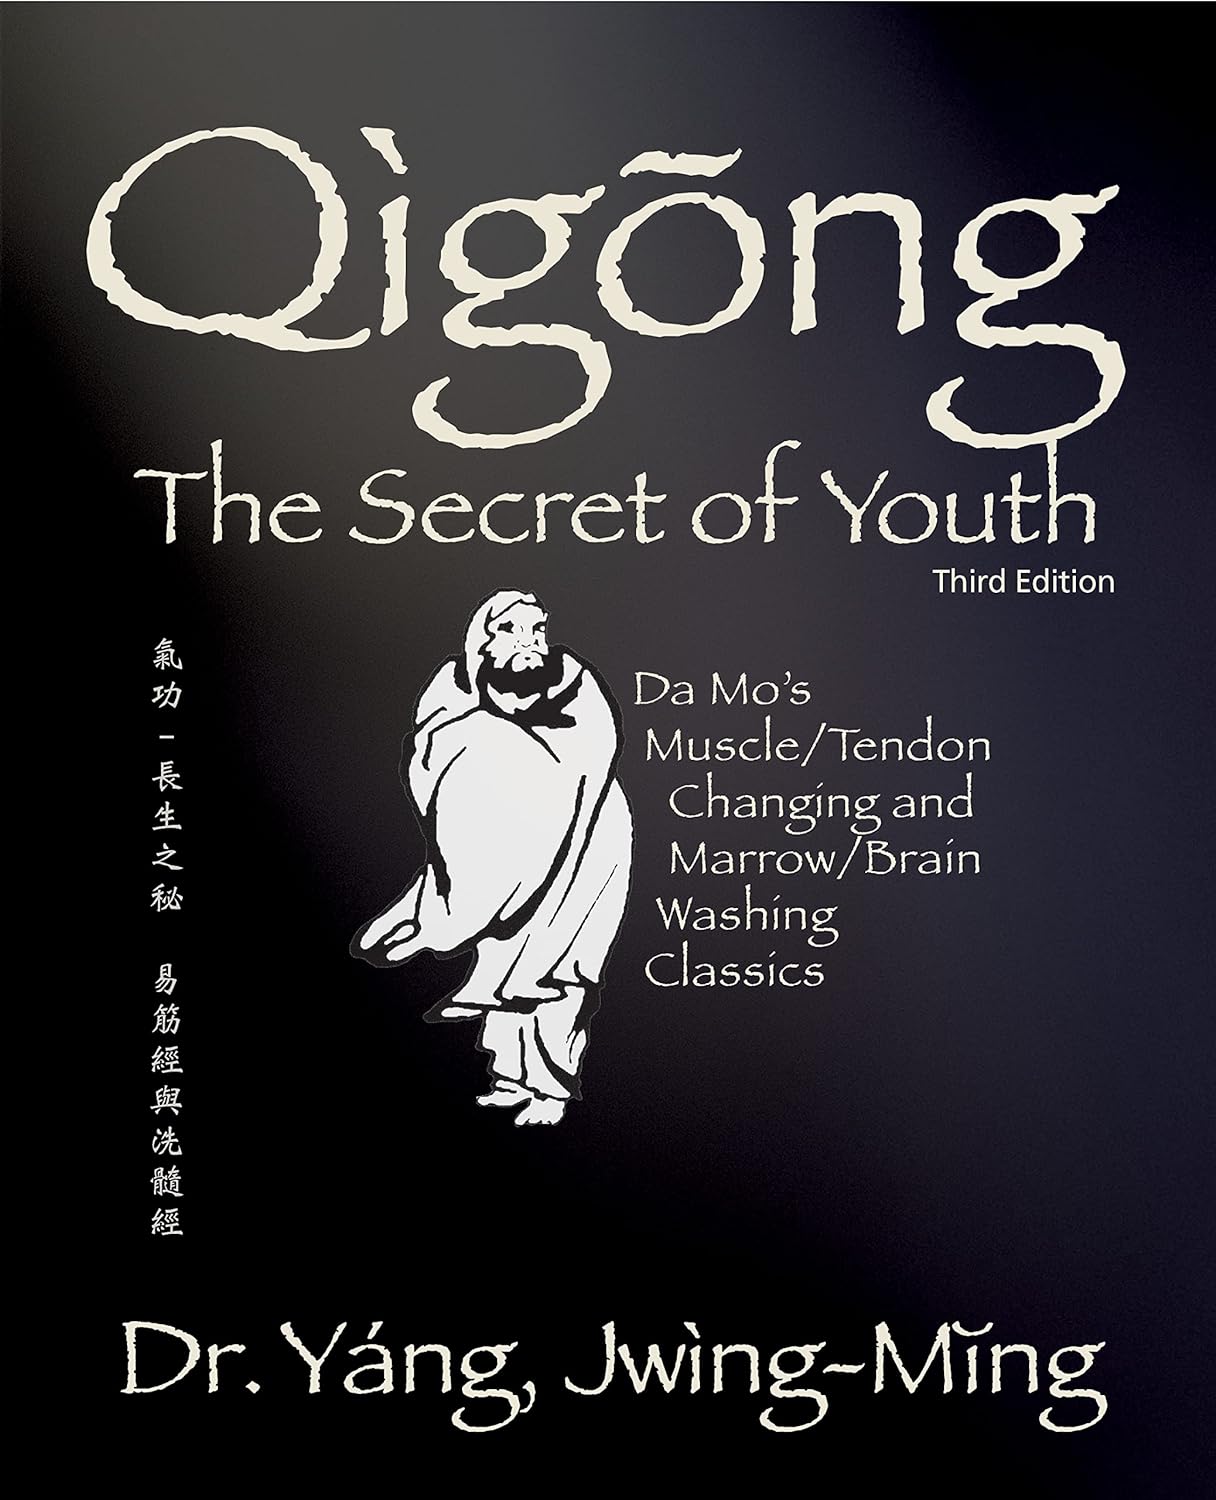 Qigong Secret of Youth (Qigong Foundation) Book by Dr Yang, Jwing-Ming (3rd Edition)